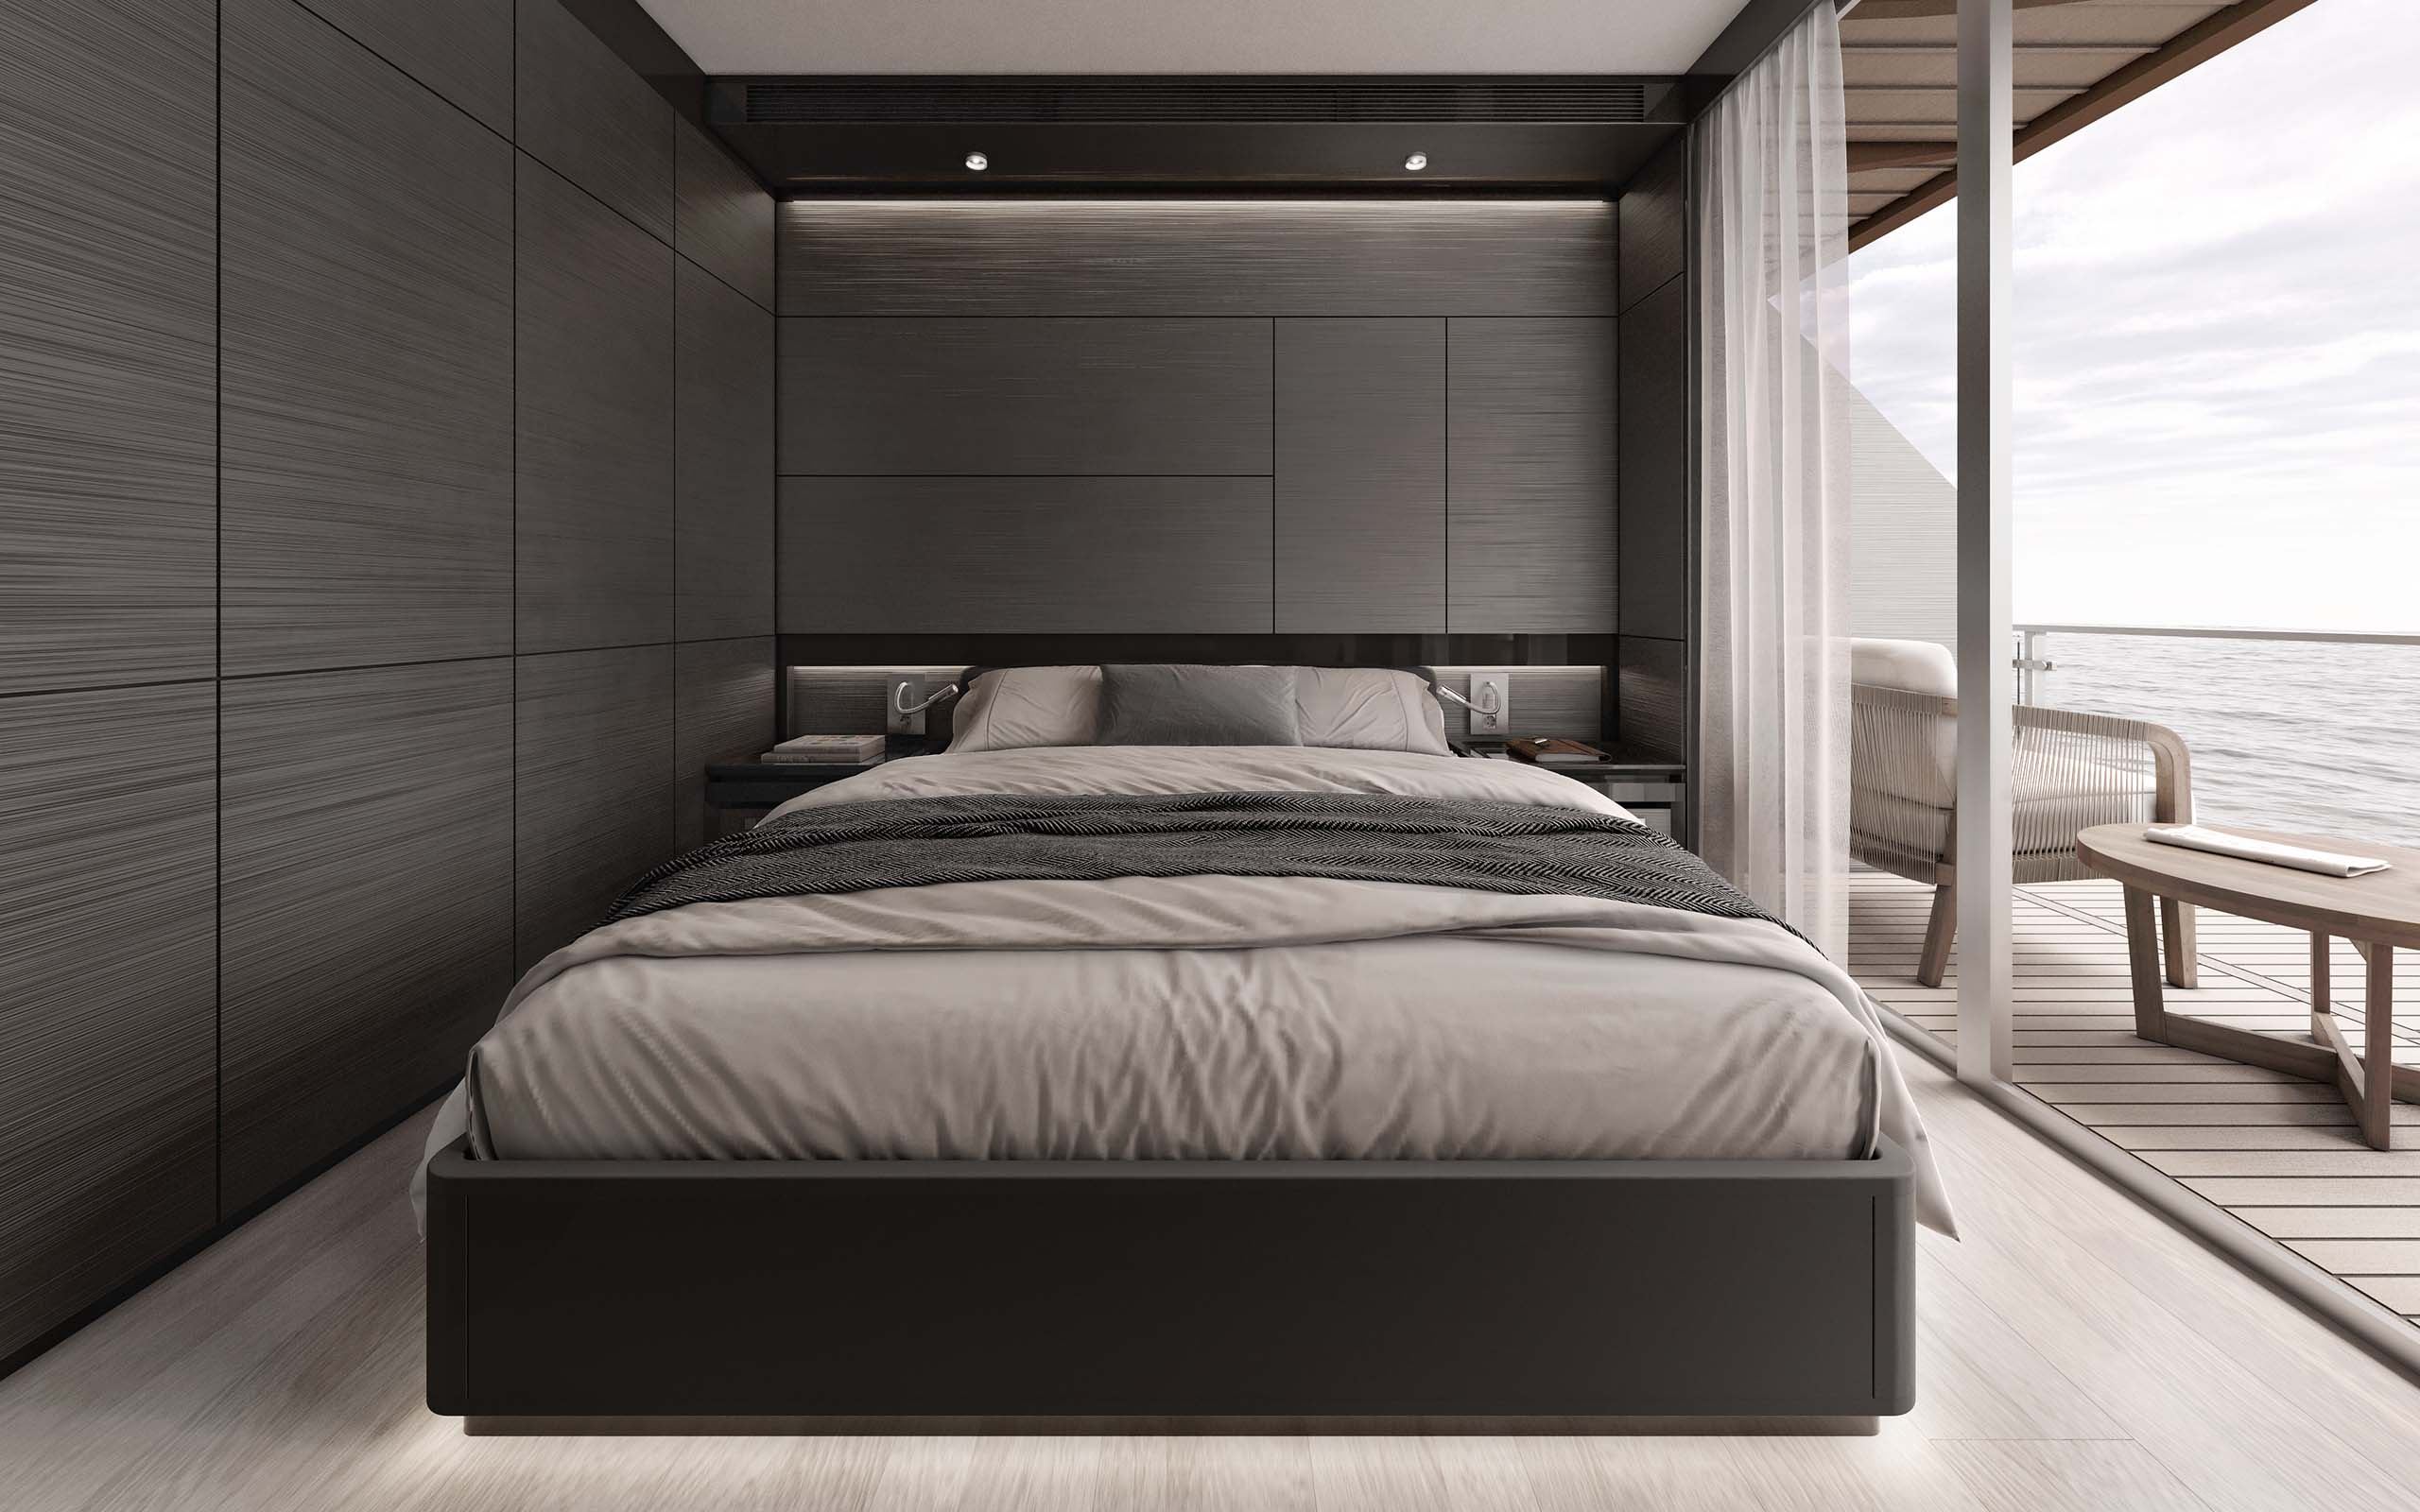 catamaran interior design of master bedroom by Suvorov Yacht Design